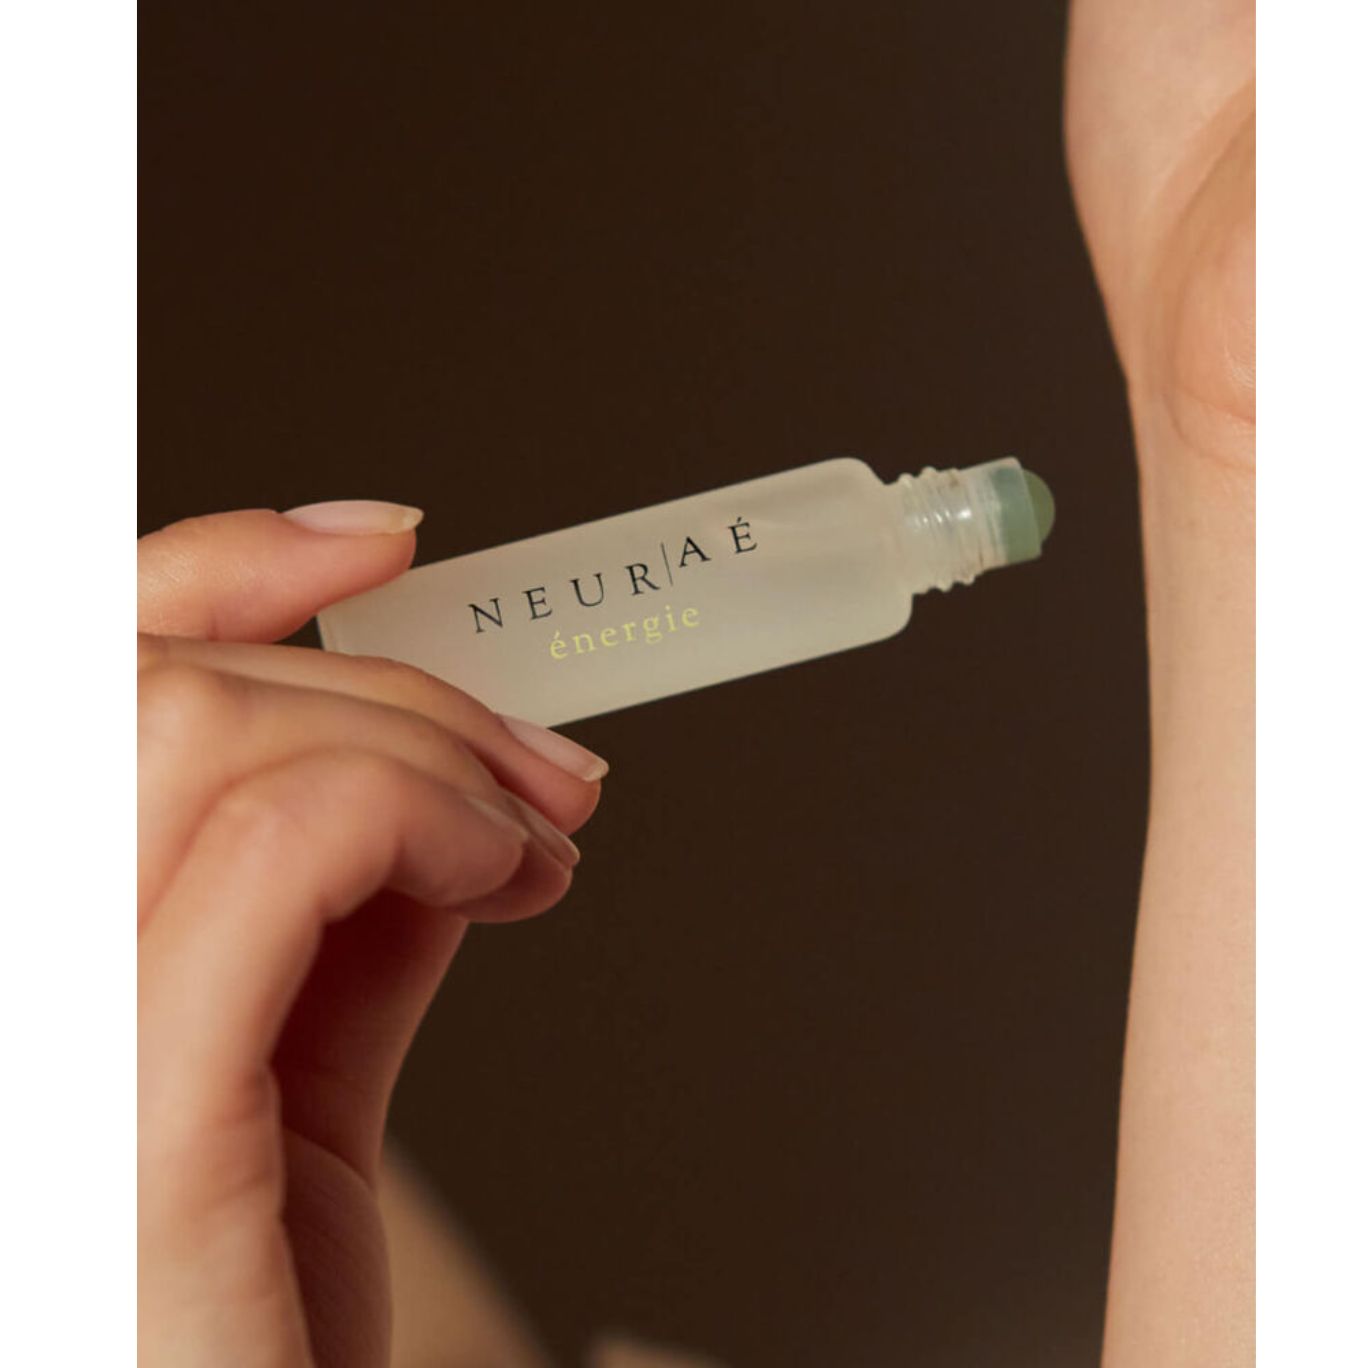 Neurae neurocosmetics skincare brand